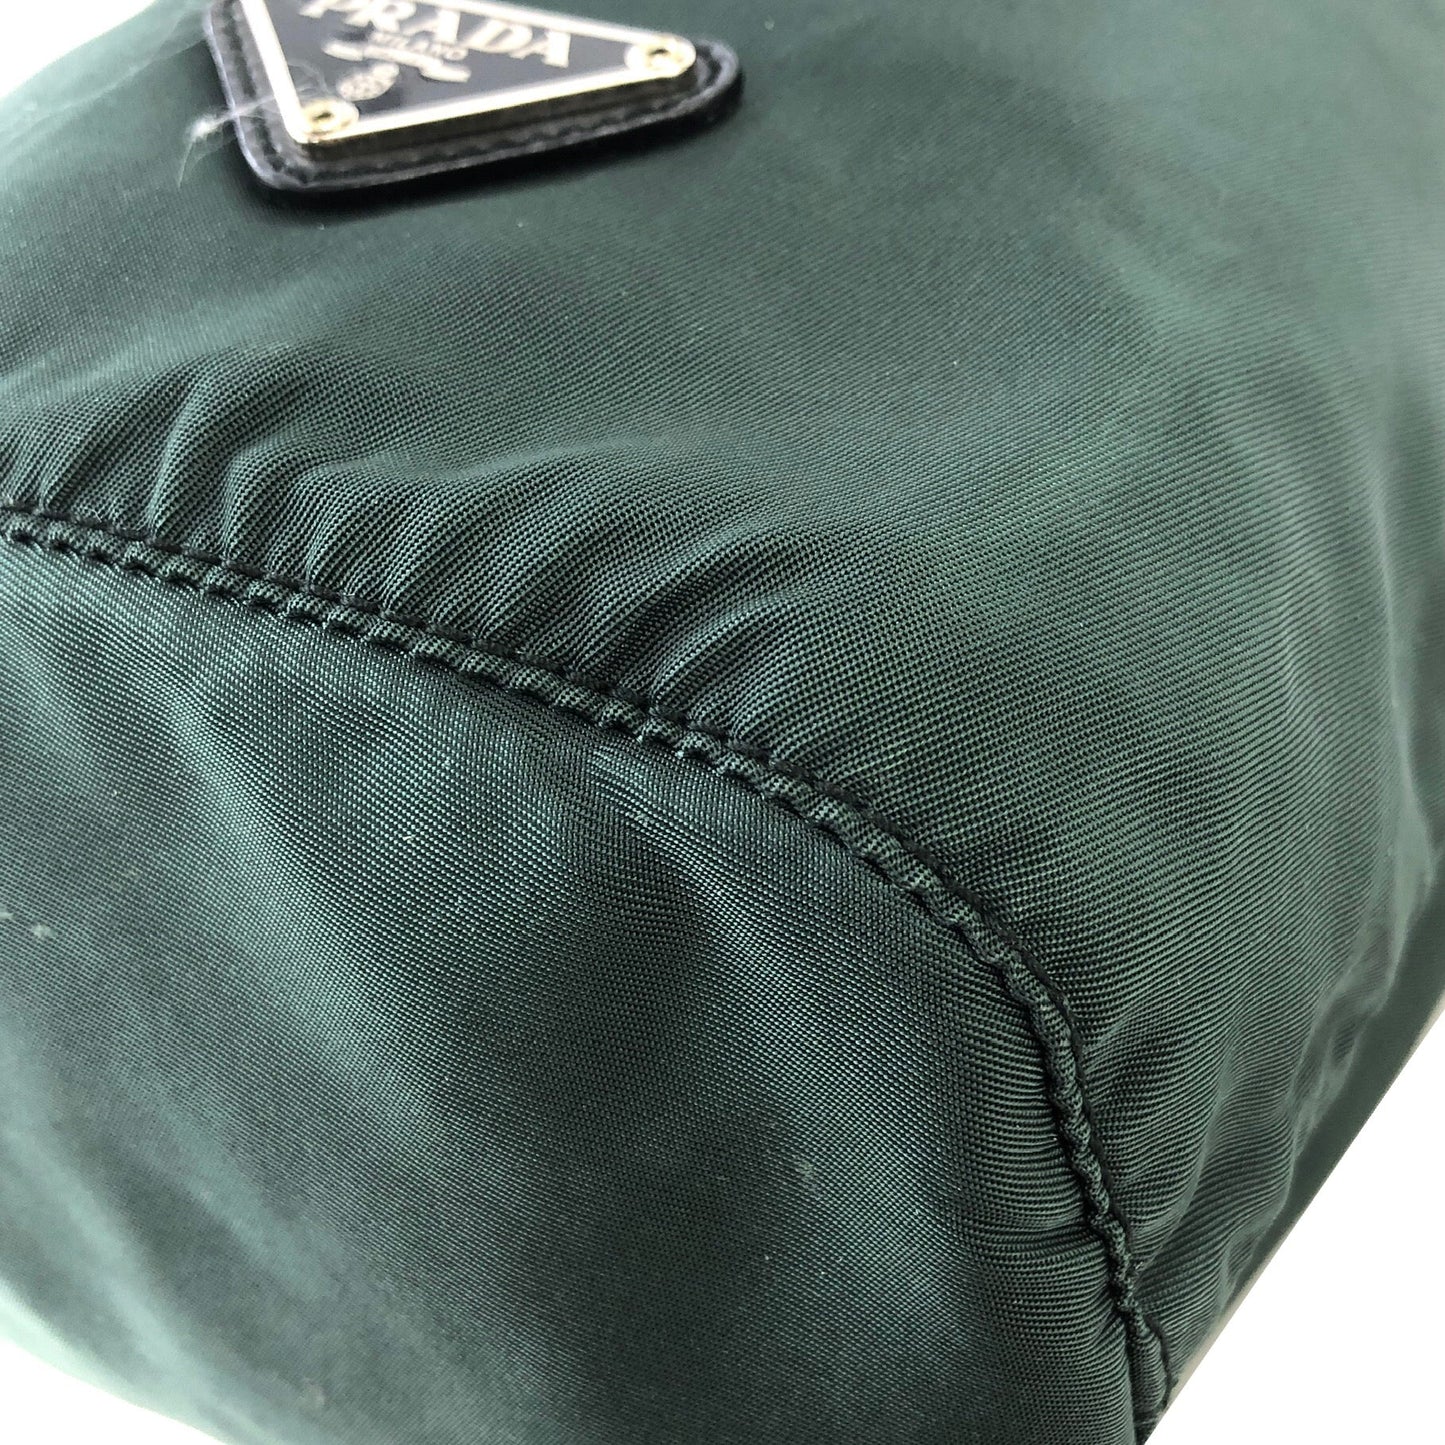 PRADA Triangle logo Nylon Drawstring Small Handbag Pouch Olive Green Vintage Old ytmp84